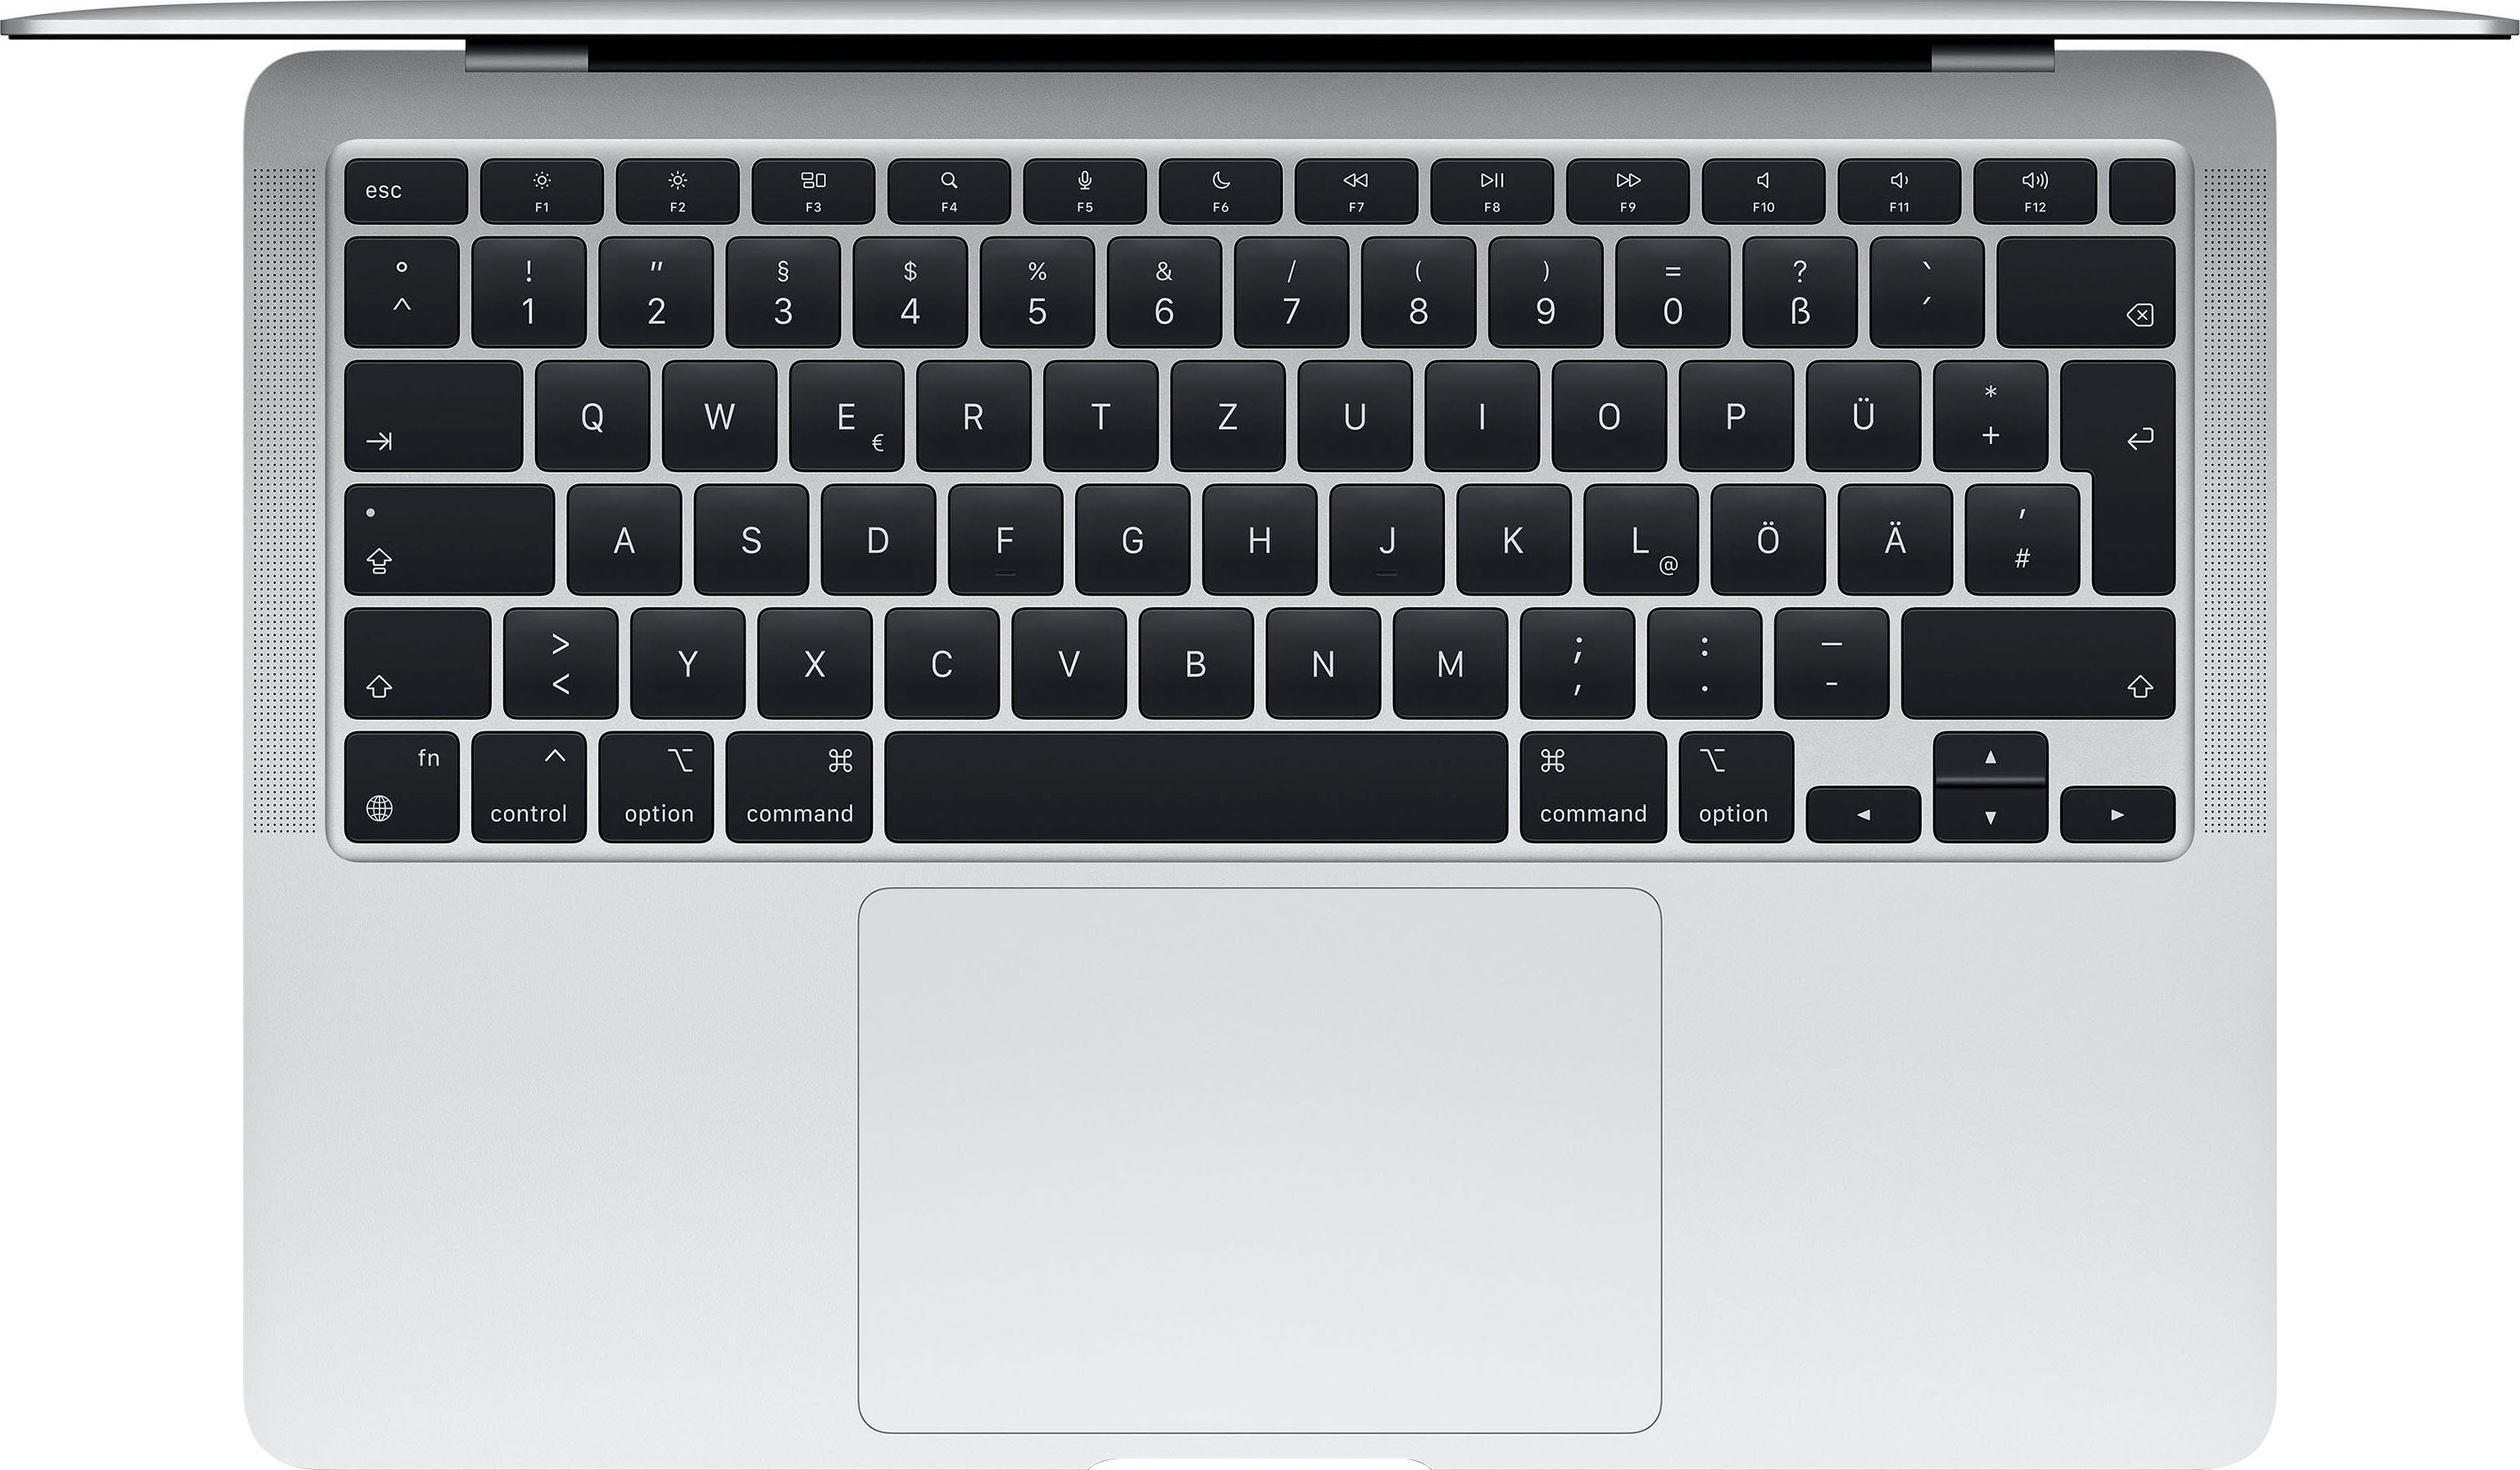 MacBook Zoll, Air 256 cm/13,3 SSD, Apple Apple CPU) GB M1, M1, (33,78 Notebook 8-core